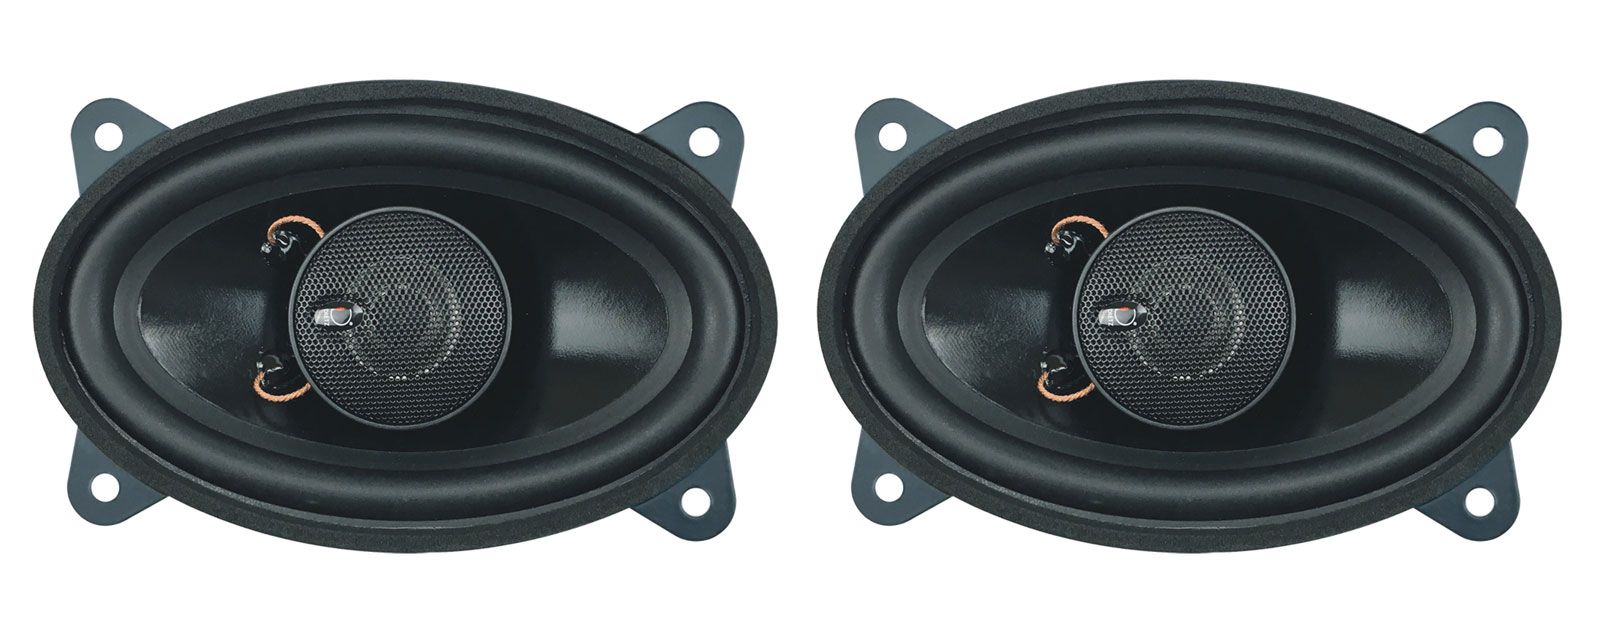 Paket] Lautsprecher 915 (4x6 Zoll), passend für Daewoo Matiz SE, Ford  Maverick, Lancia Thema